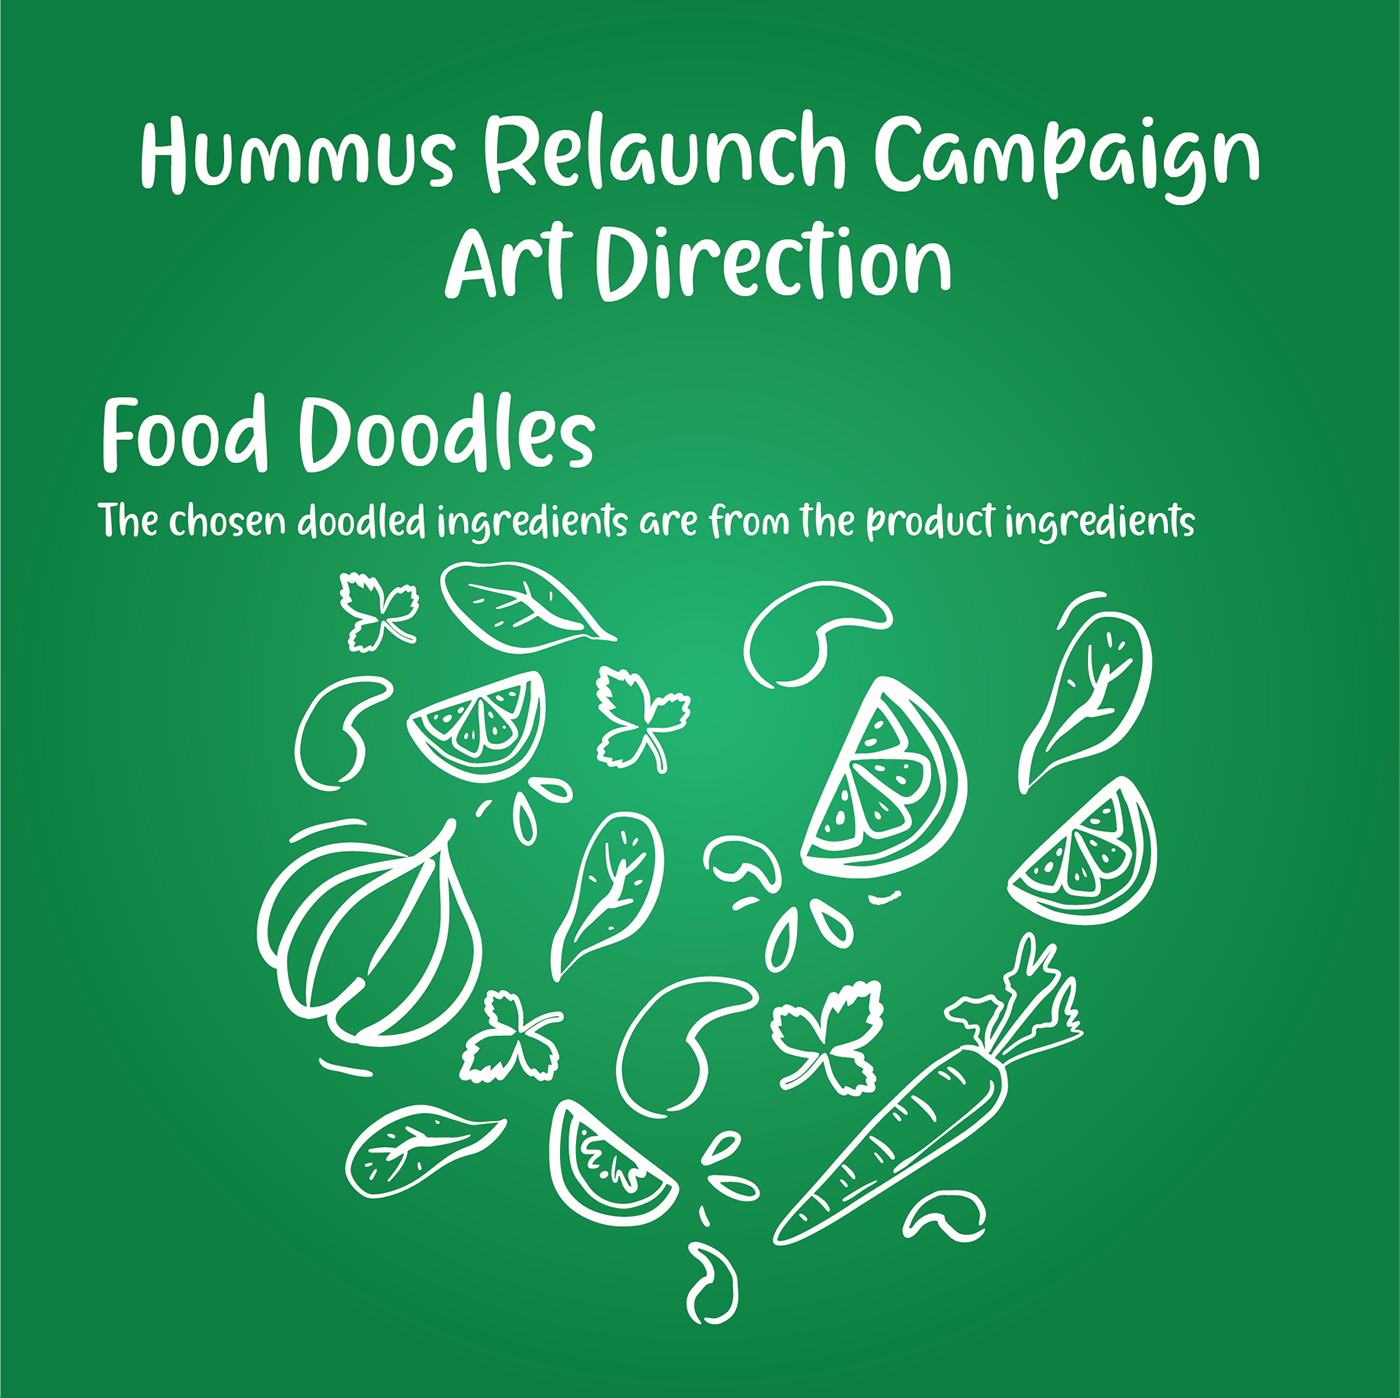 Arabic Food doodles campaign HUMMOUS hummus